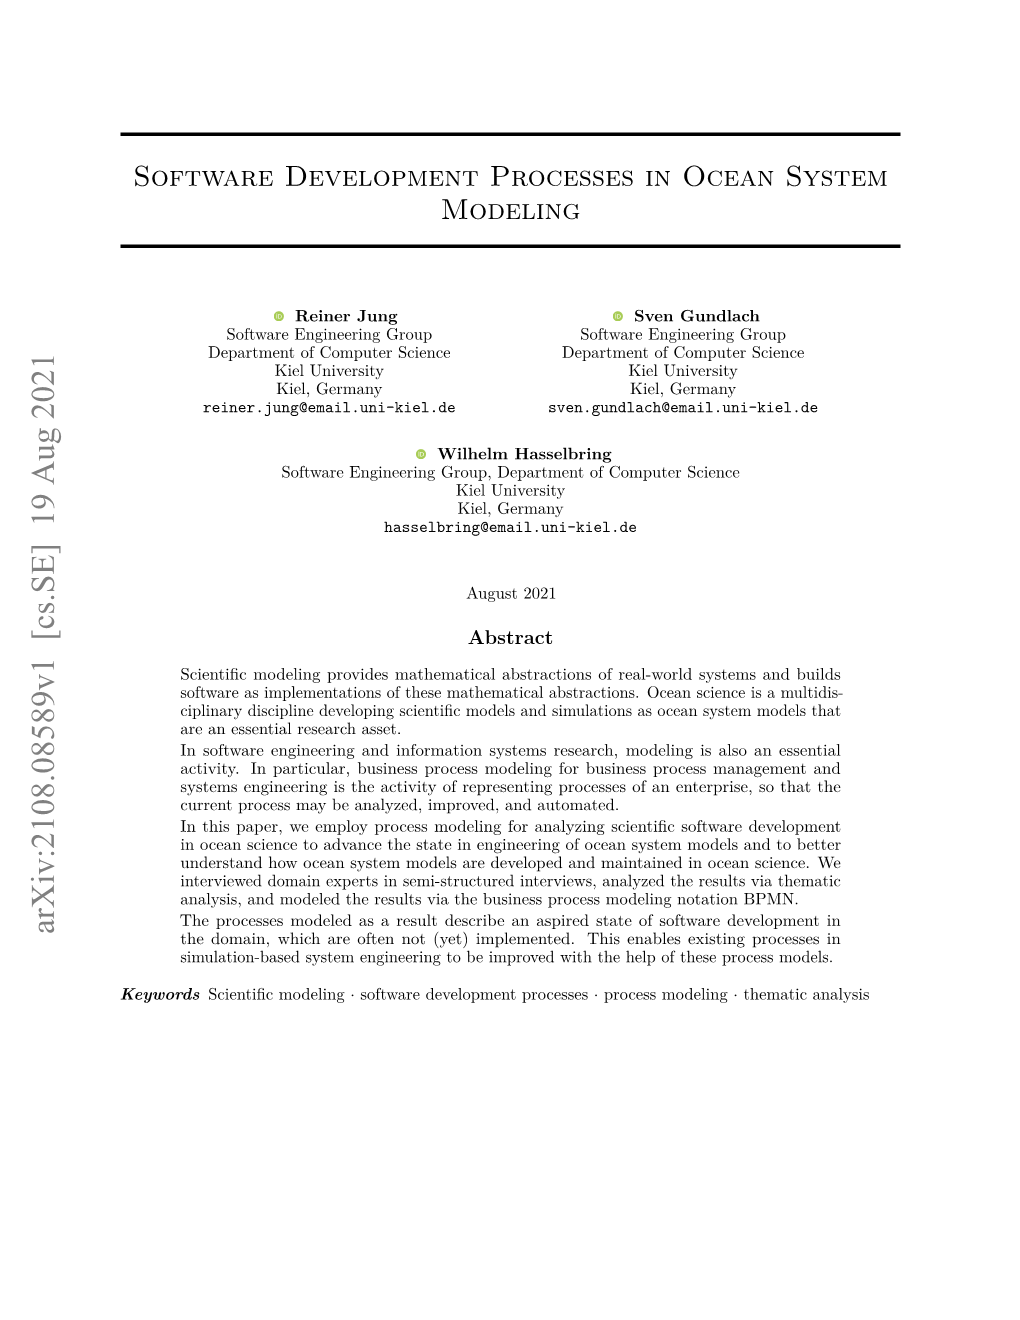 Software Development Processes in Ocean System Modeling